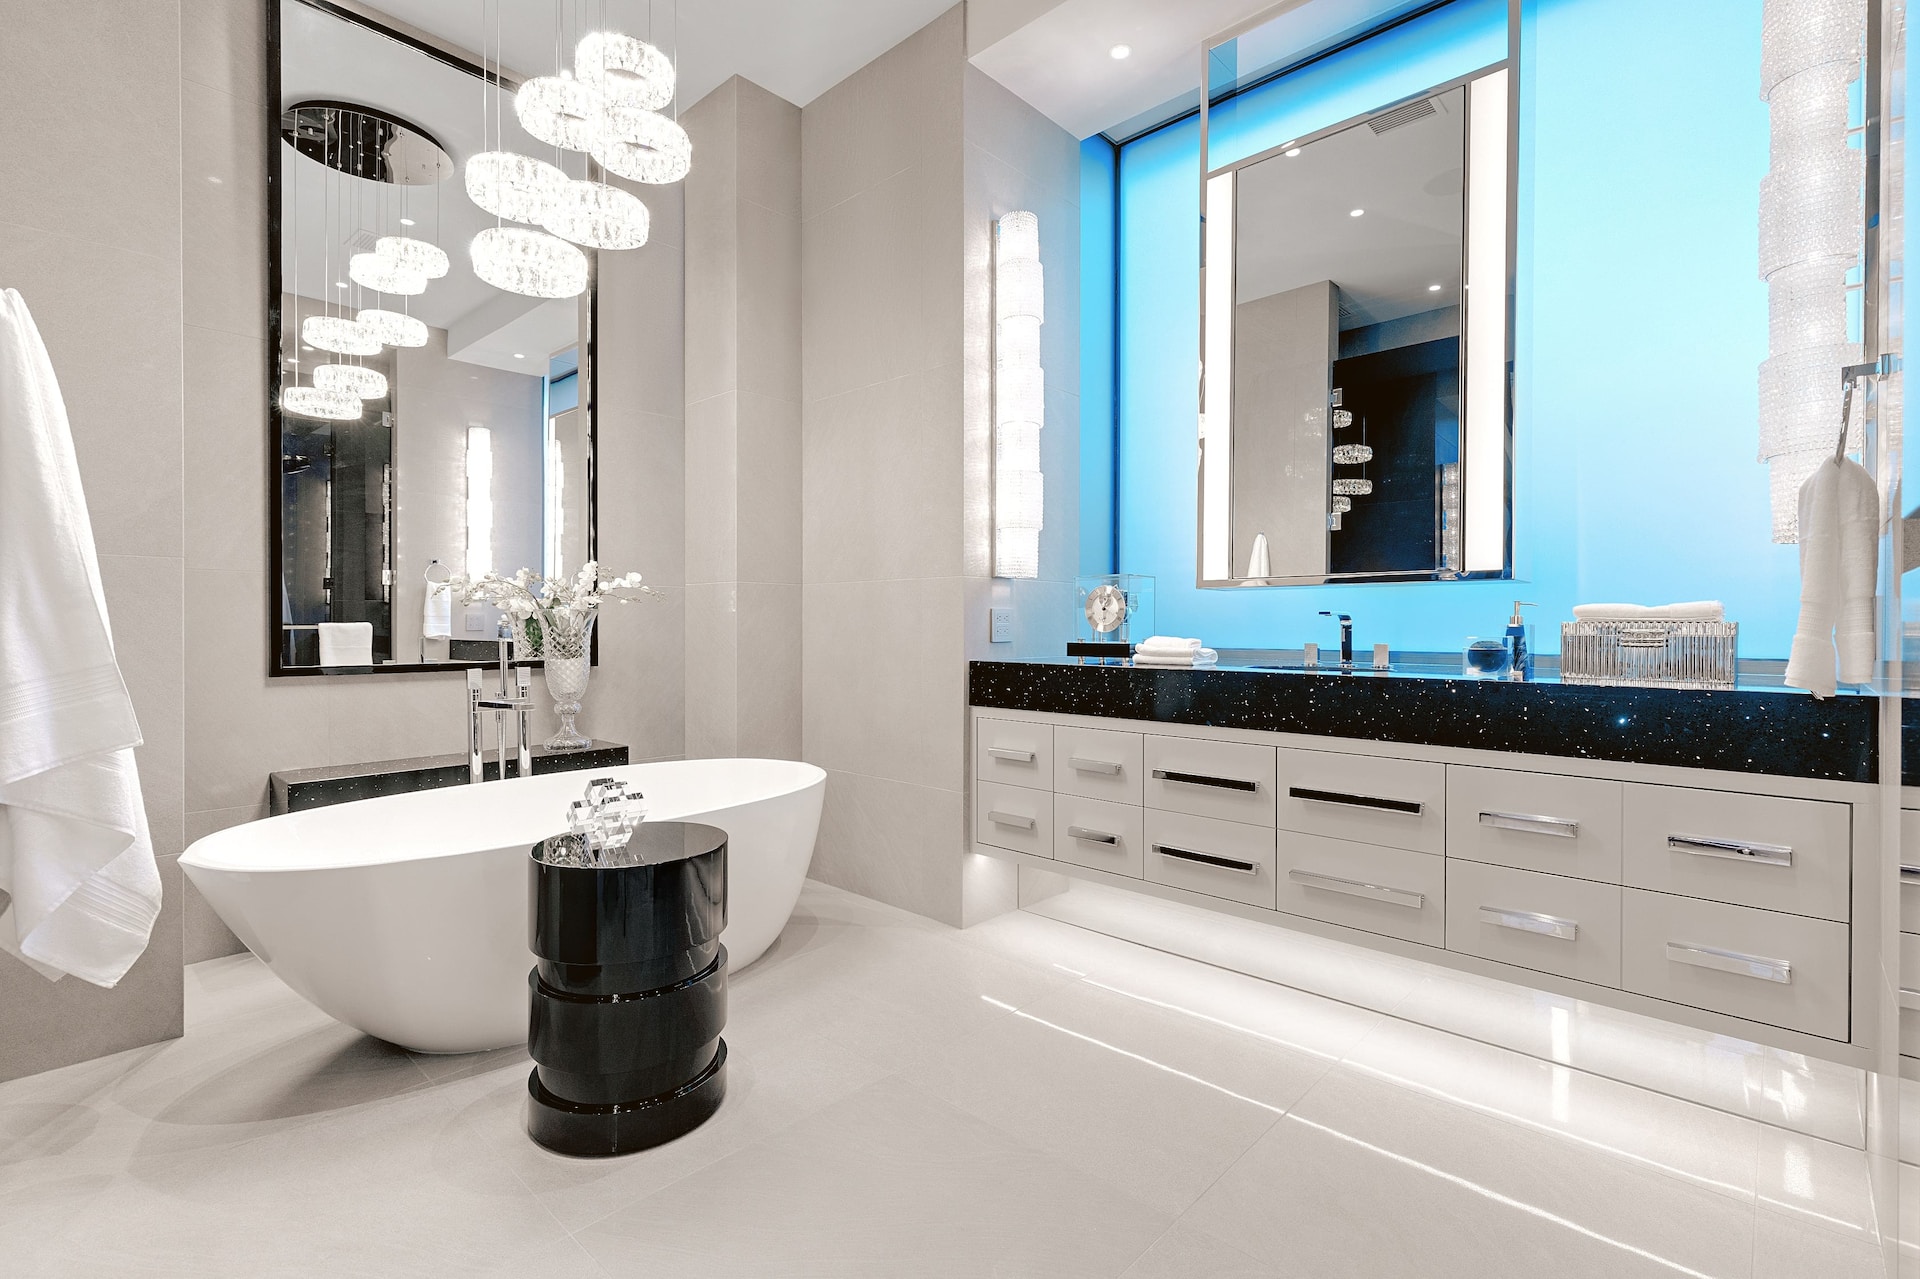 Slim Towel Racks - Modern Bath Furniture - Room & Board  White bathroom  decor, Small bathroom makeover, Bathroom towel bar